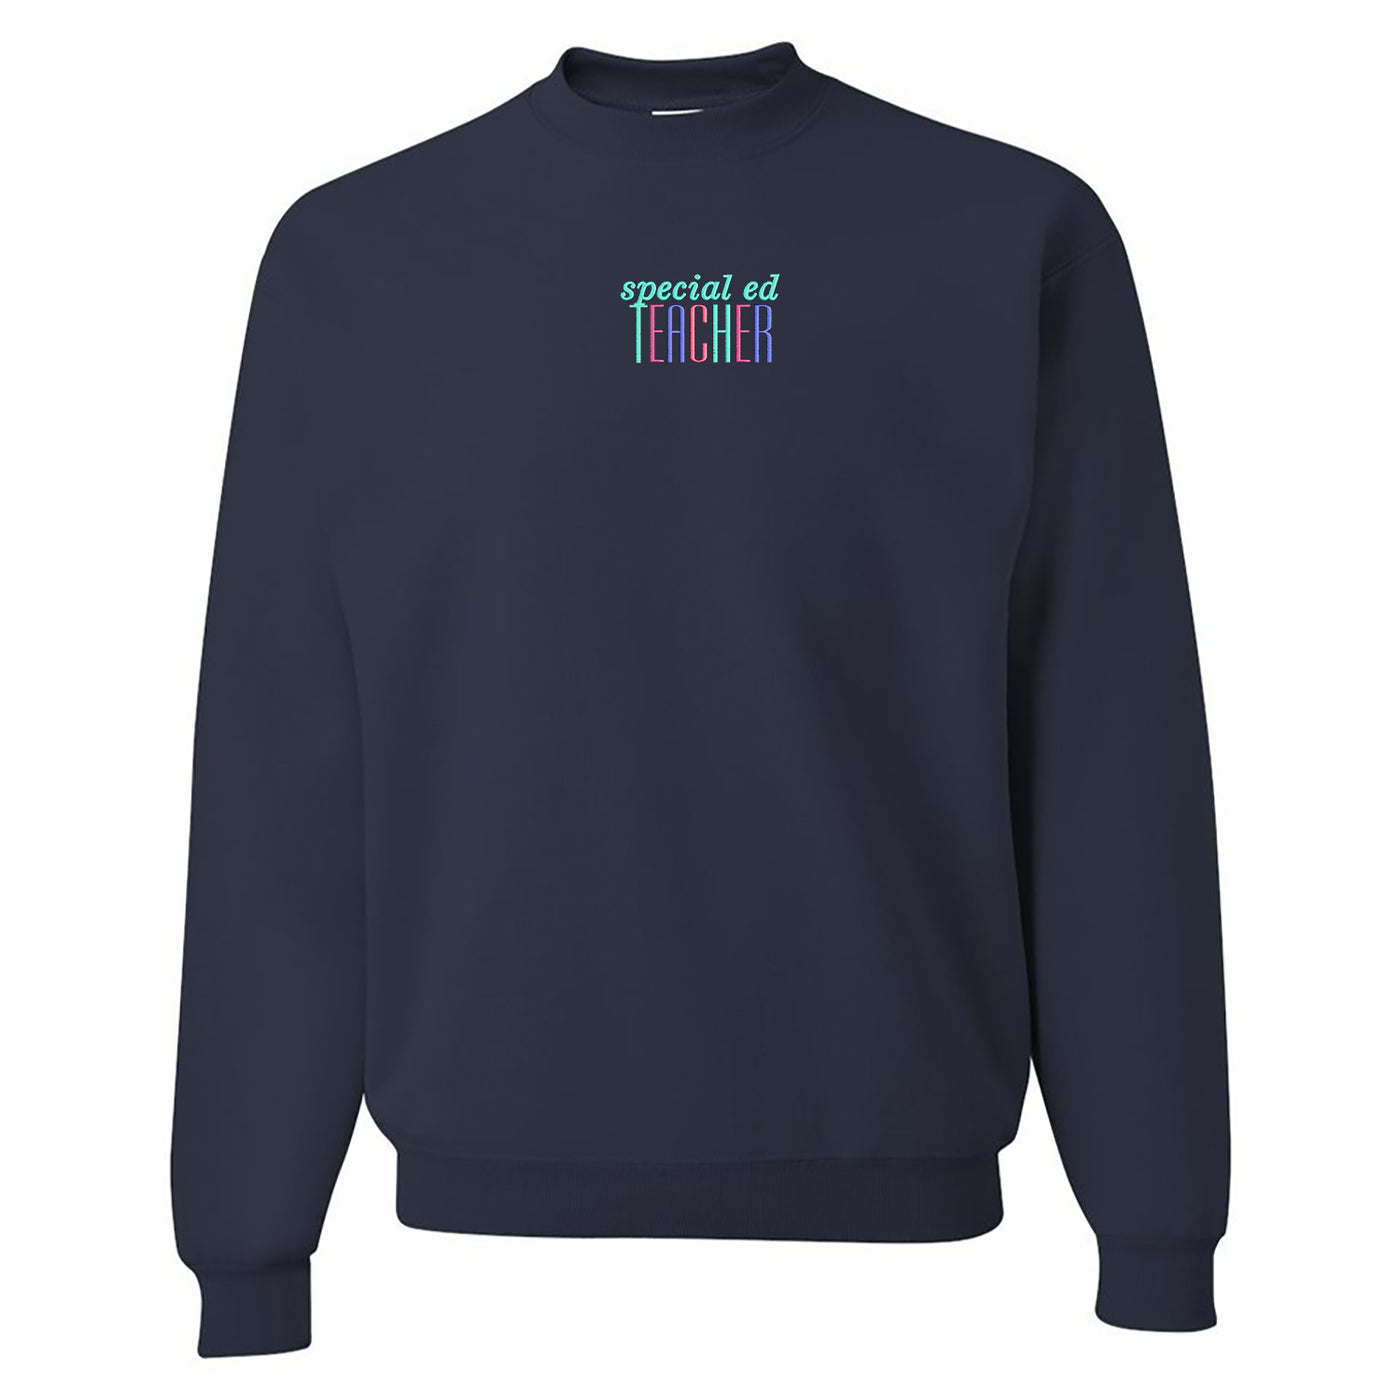 Make It Yours™ Teacher Crewneck Sweatshirt